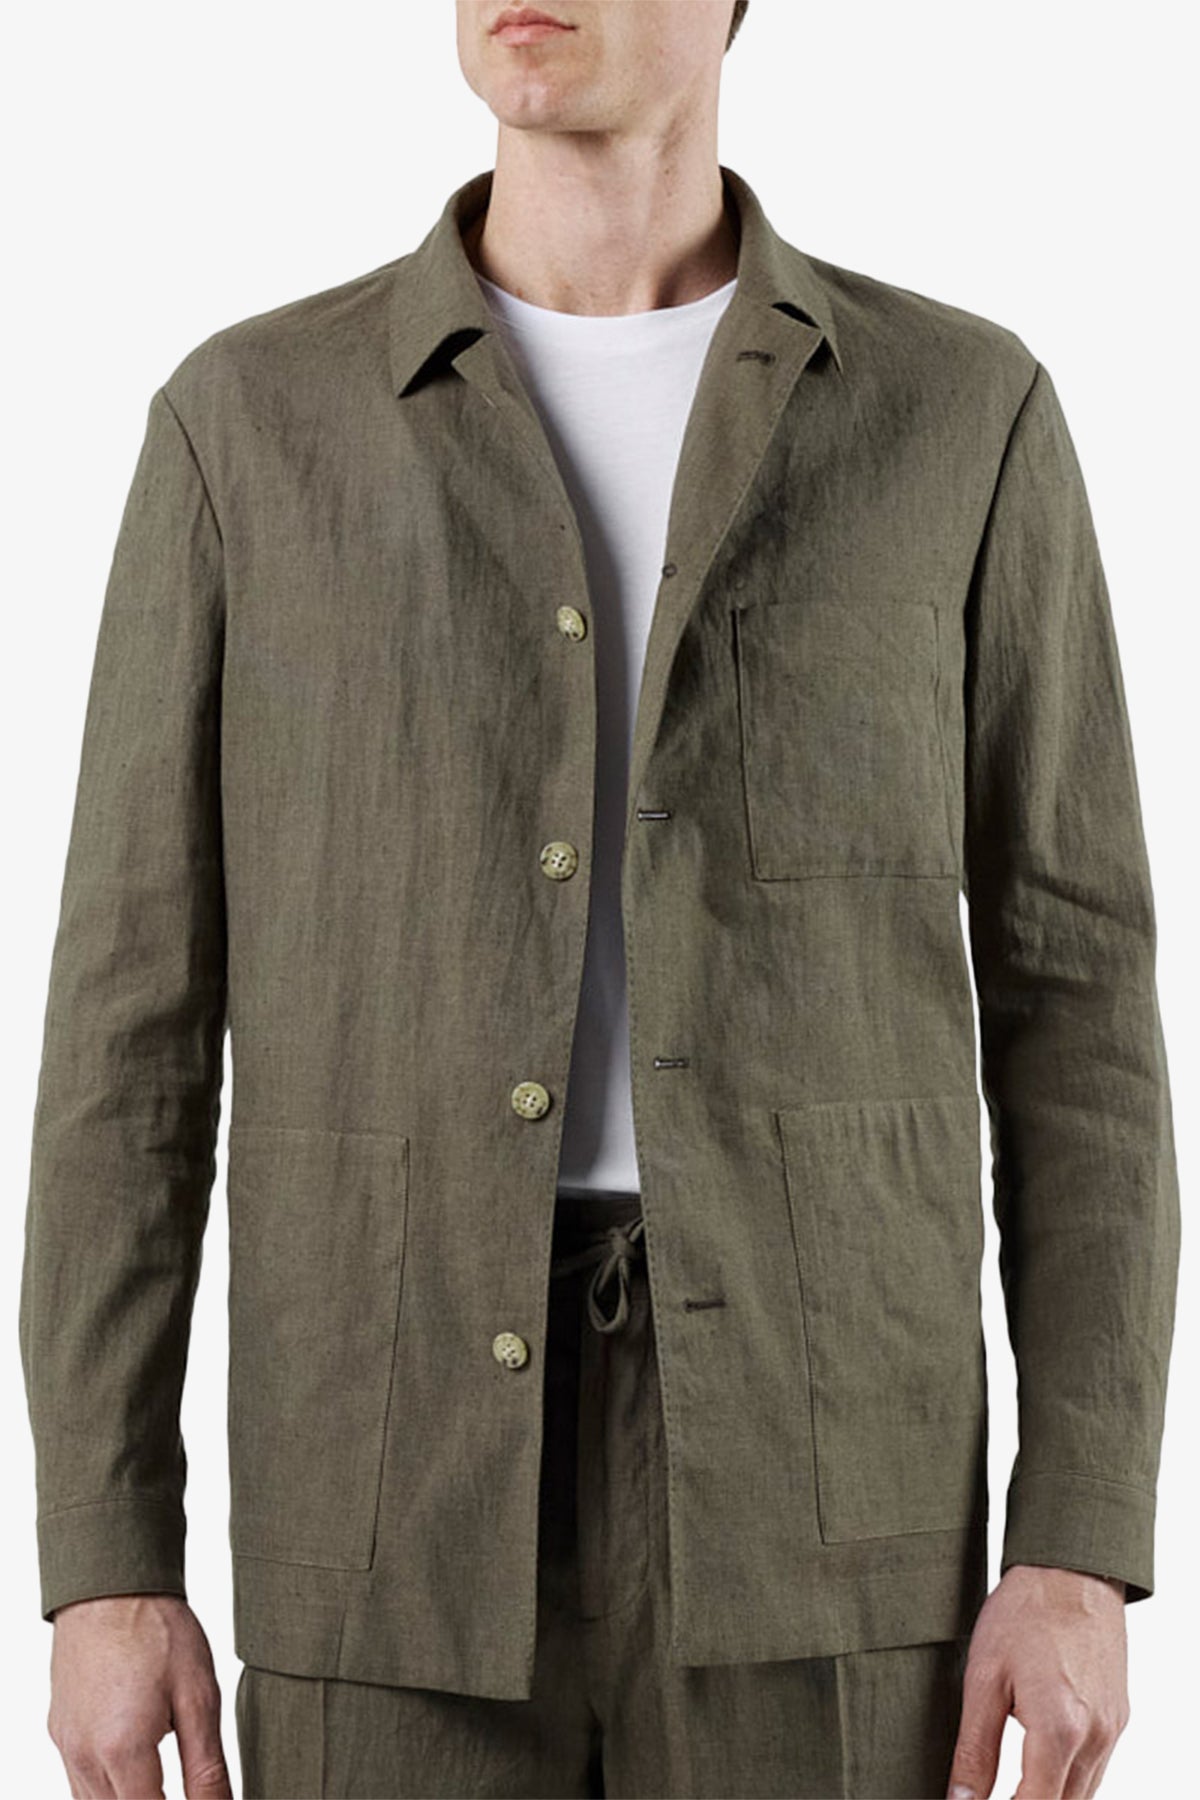 Arienzo - Khaki Shirt Jacket